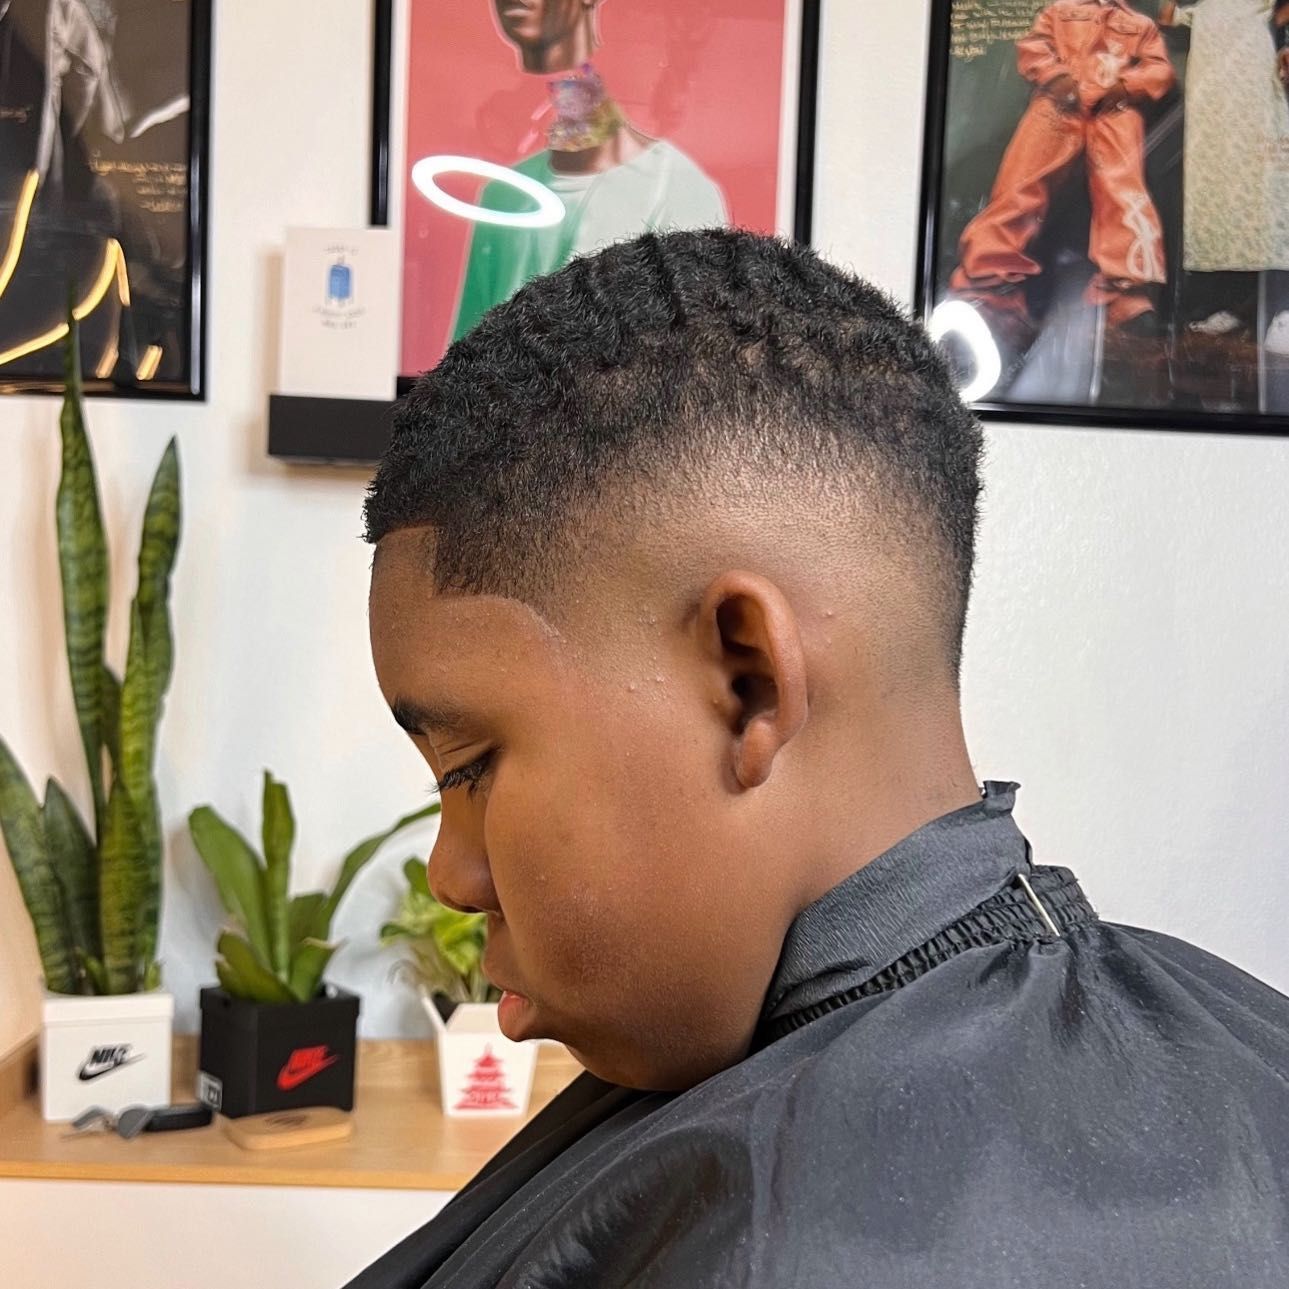 Kids Haircut DEPOSIT REQUIRED via ZELLE/APPLEPAY portfolio